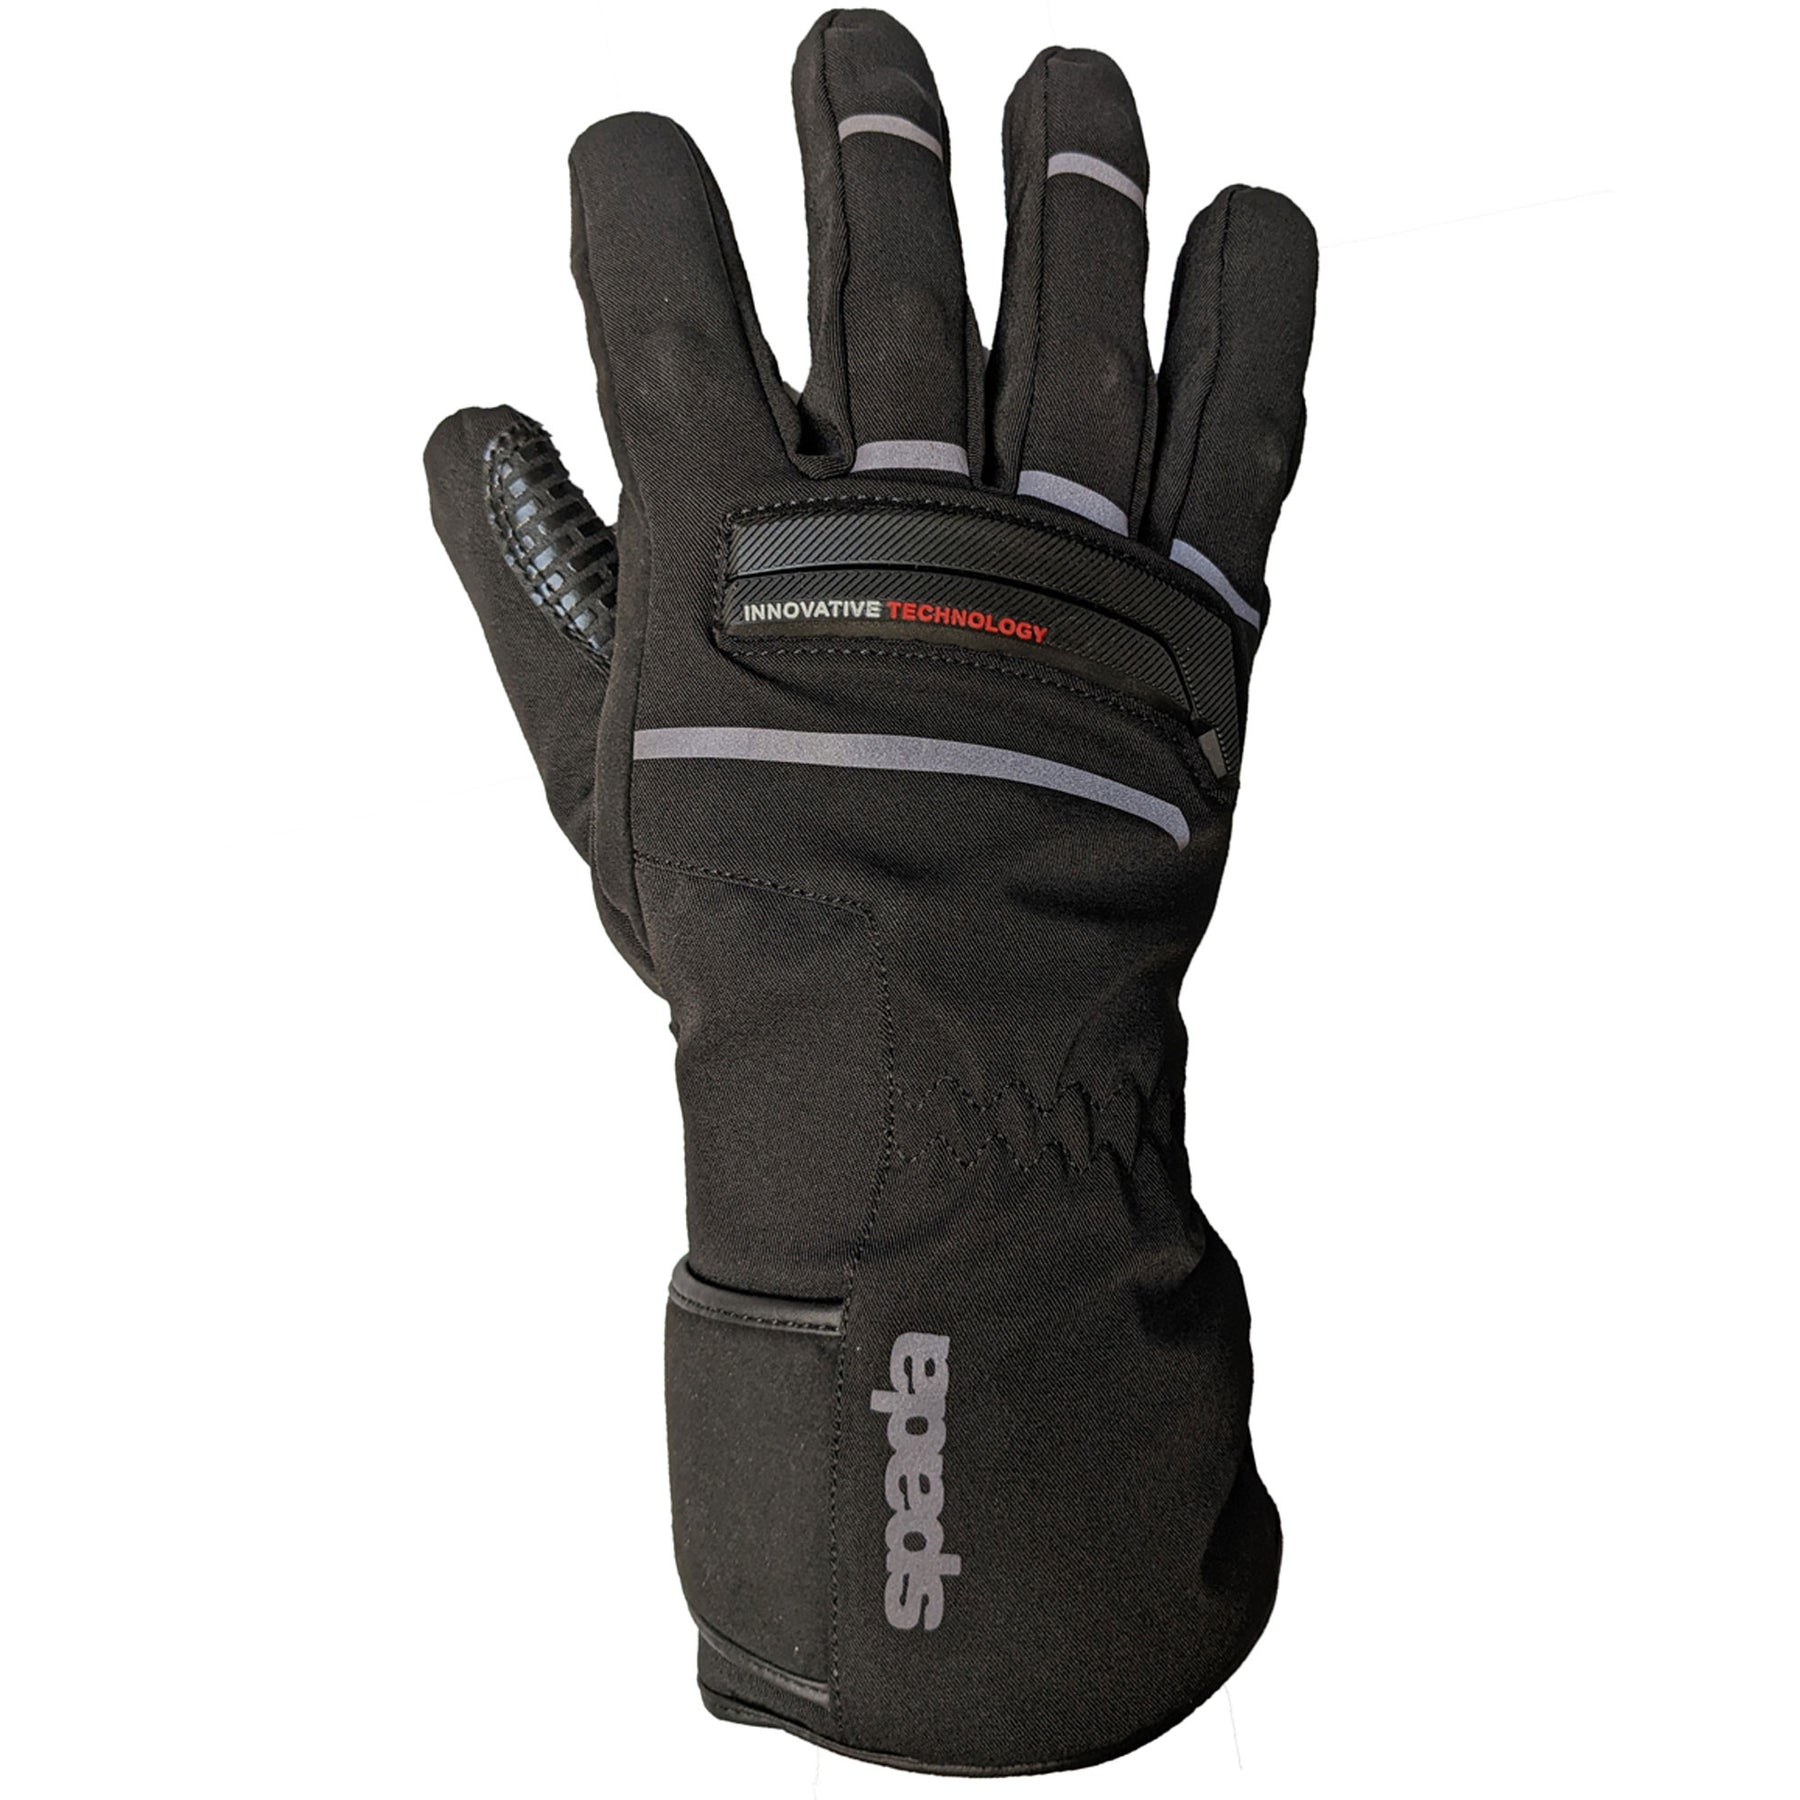 Spada Leather Gloves Hunza CE Black